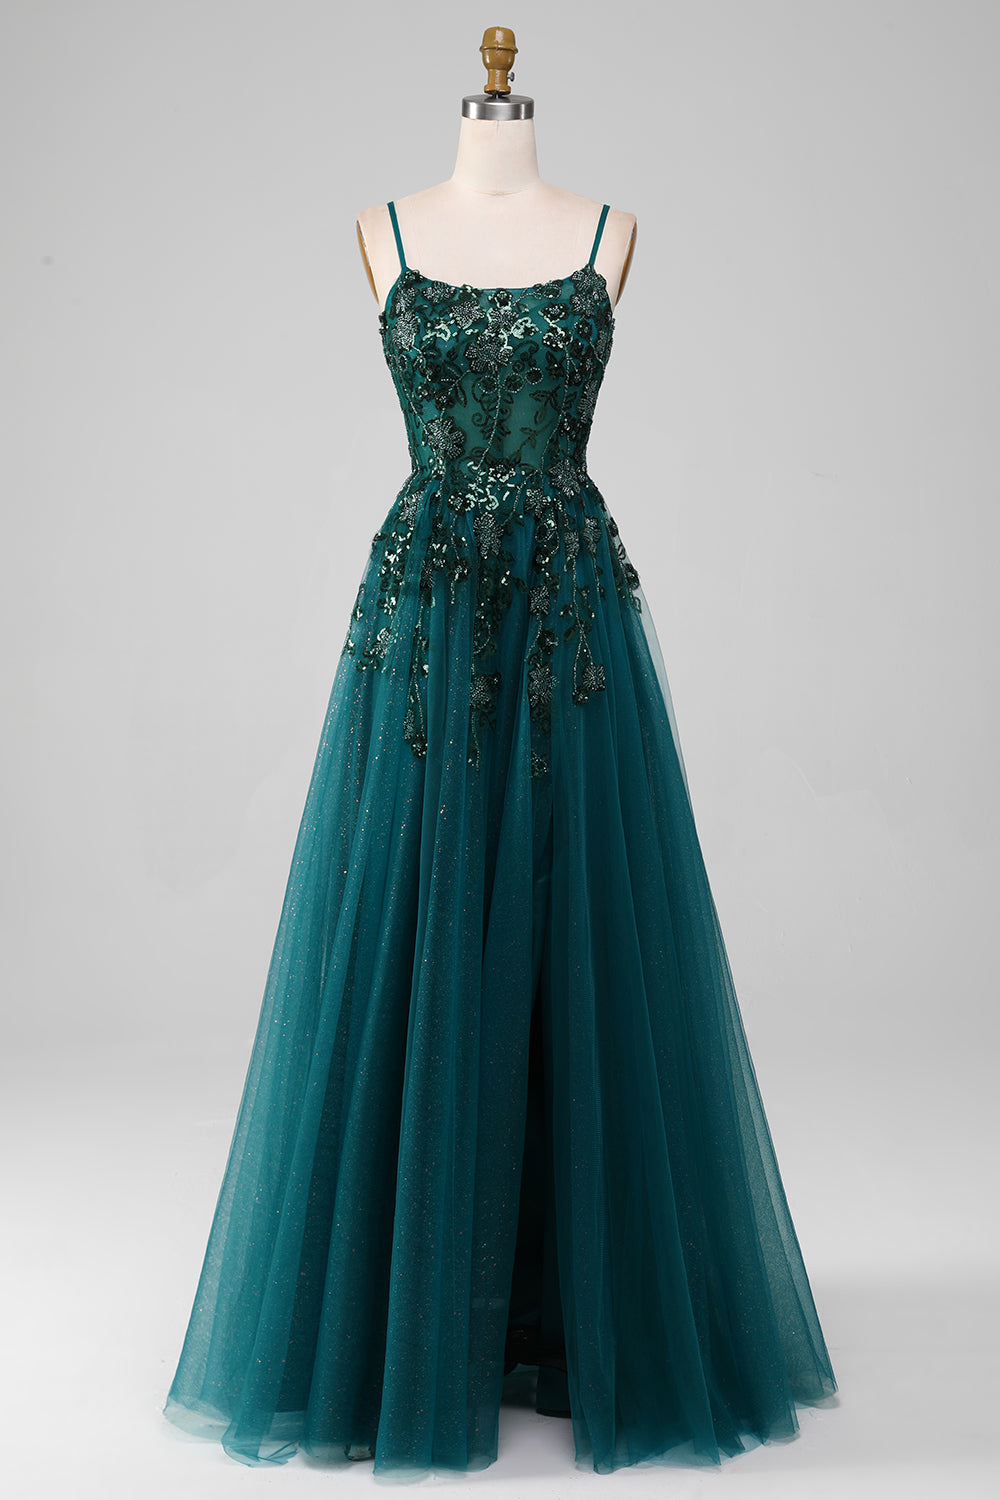 Prom Dresses Mermaid, Dark Green Spaghetti Straps A Line Prom Dress with Slit